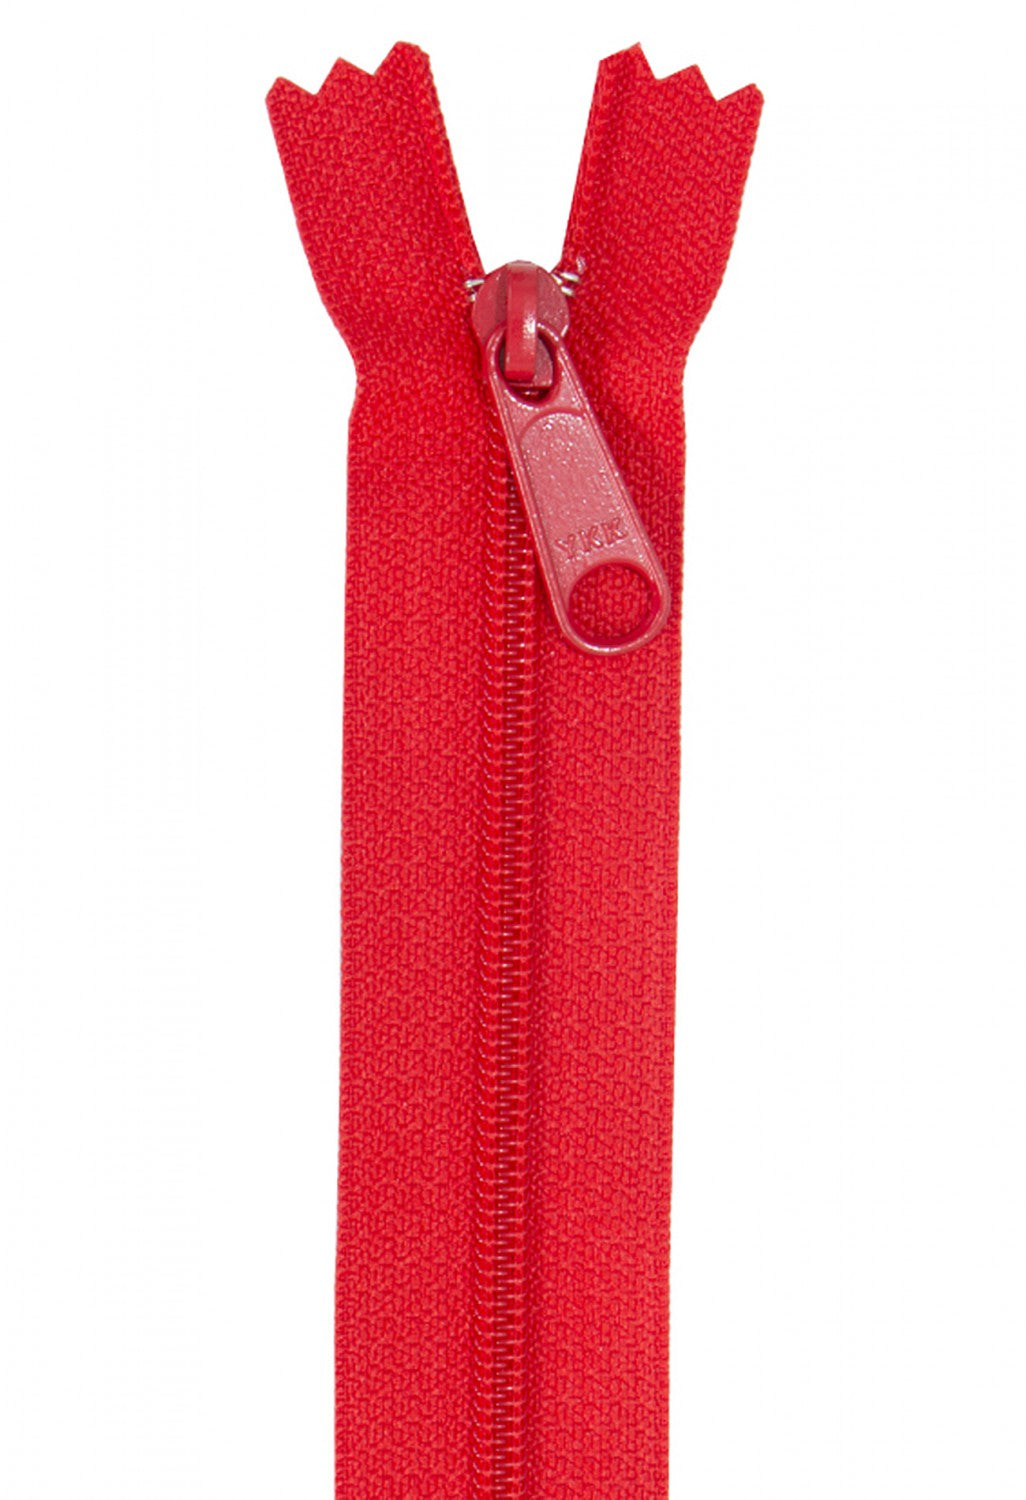 Handbag Zipper - Atom Red - 24" - by Annie